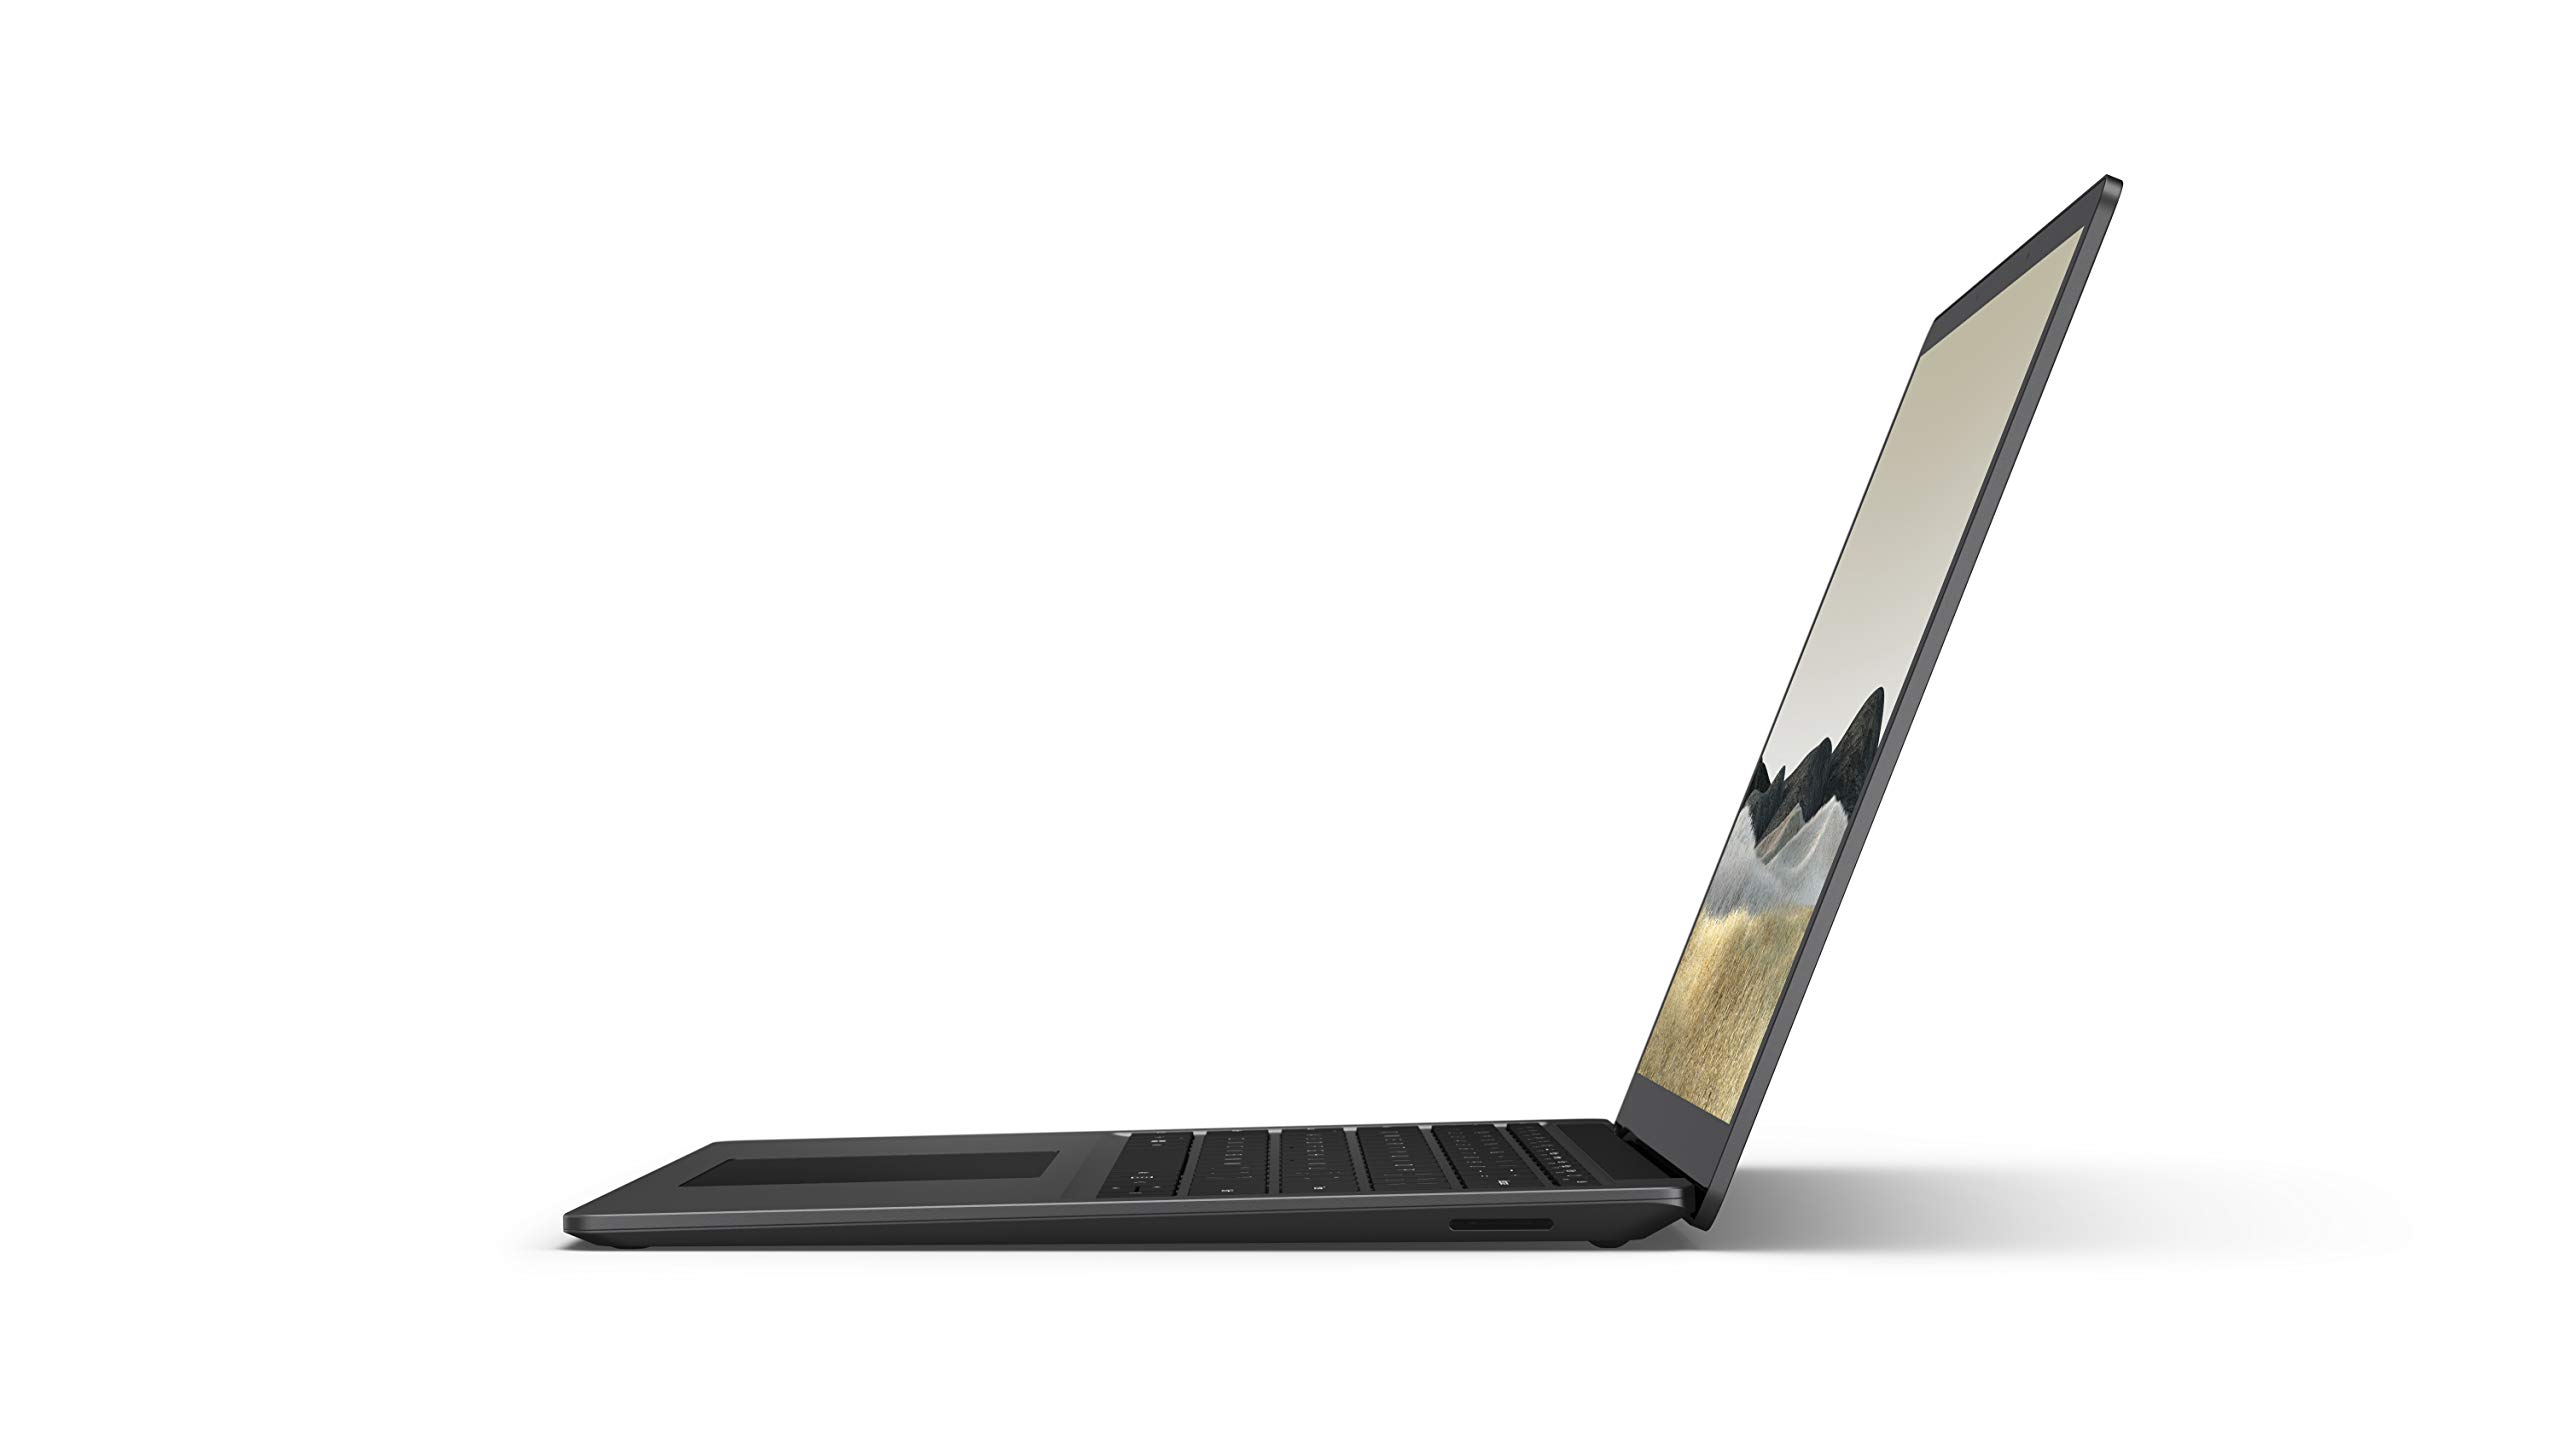 Microsoft Surface Laptop 3 – 13.5